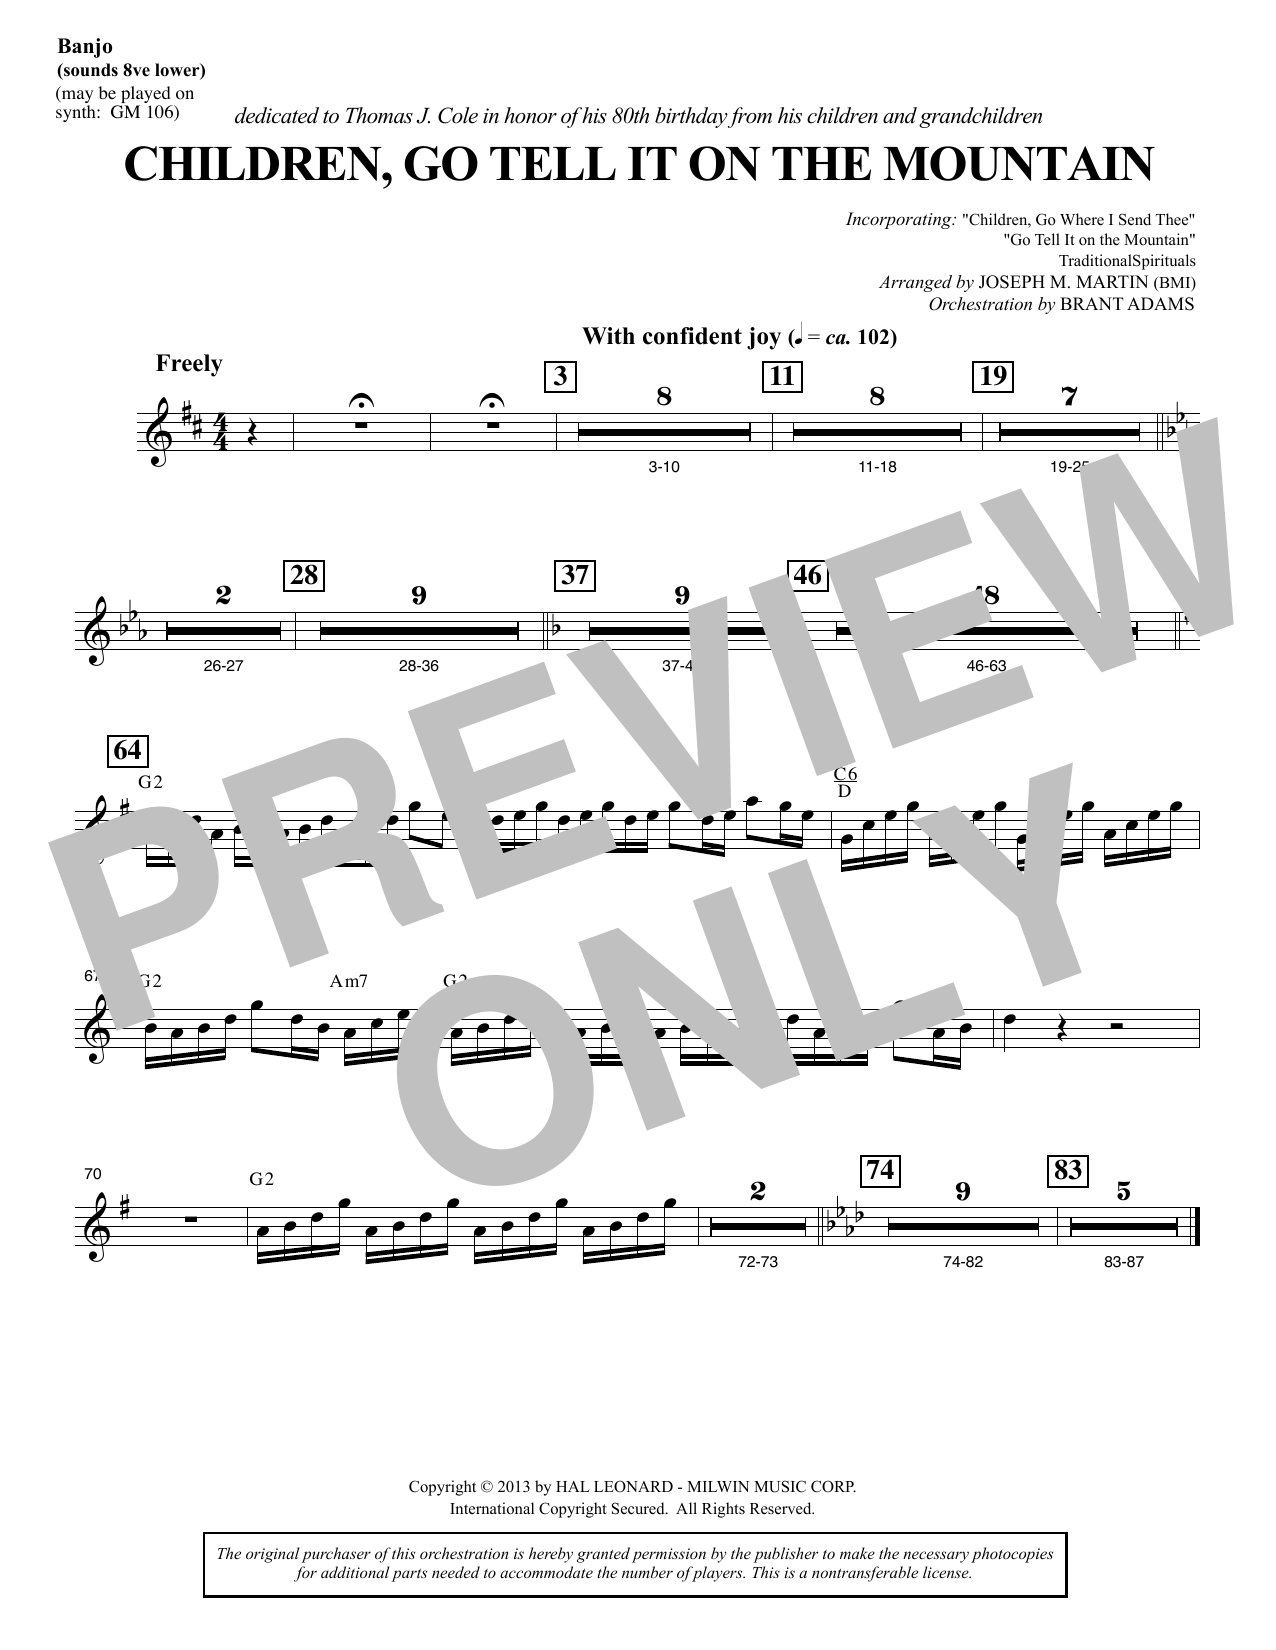 Joseph M. Martin Children, Go Tell It on the Mountain - Banjo Sheet Music Notes & Chords for Choir Instrumental Pak - Download or Print PDF